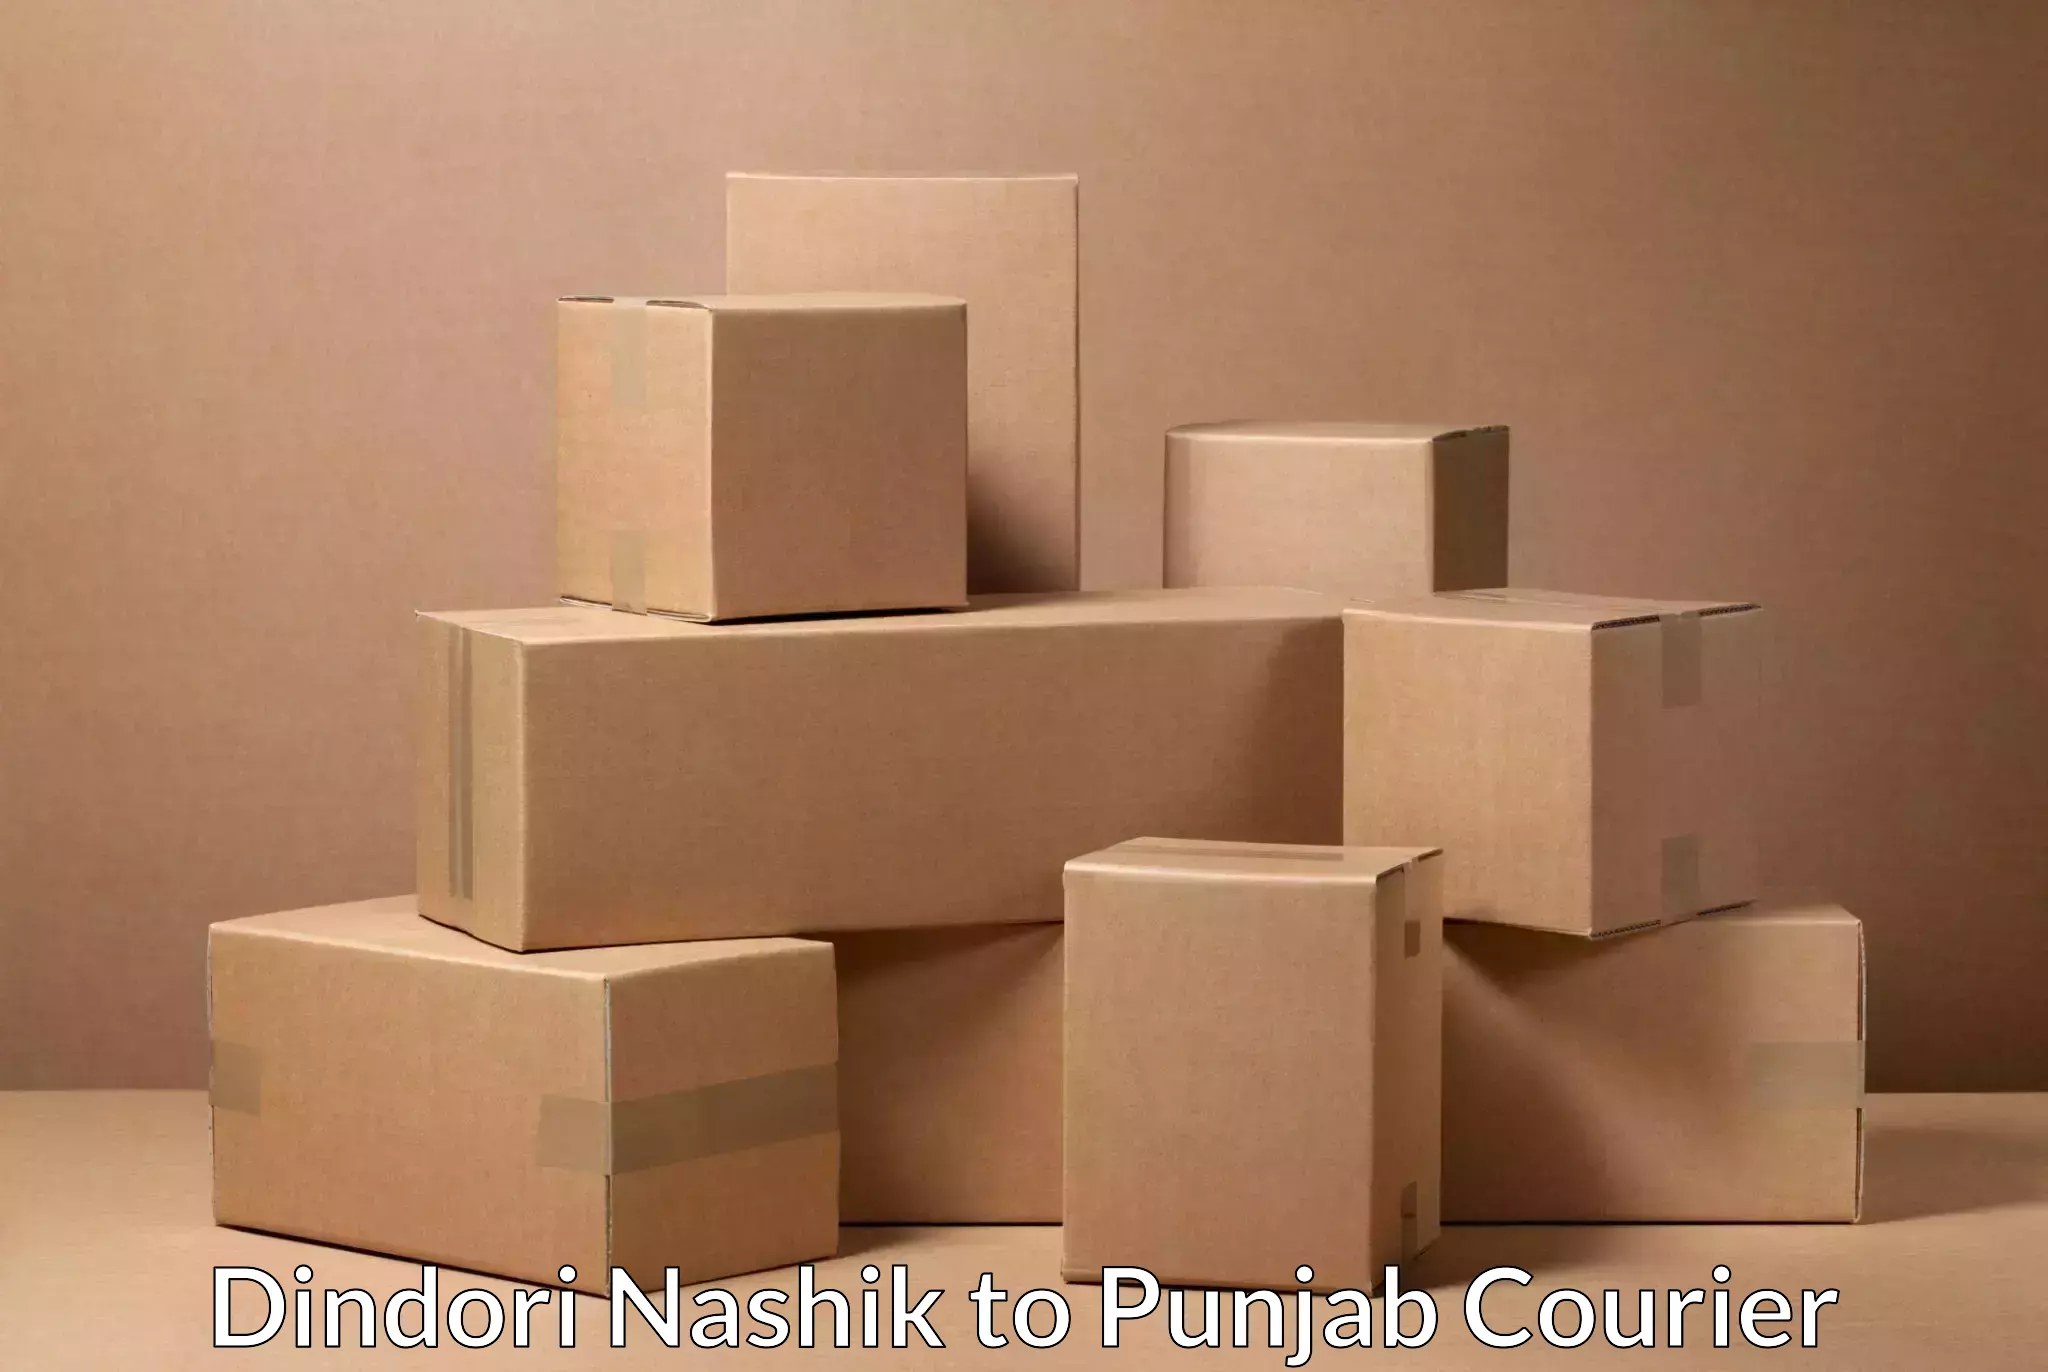 Nationwide delivery network Dindori Nashik to Punjab